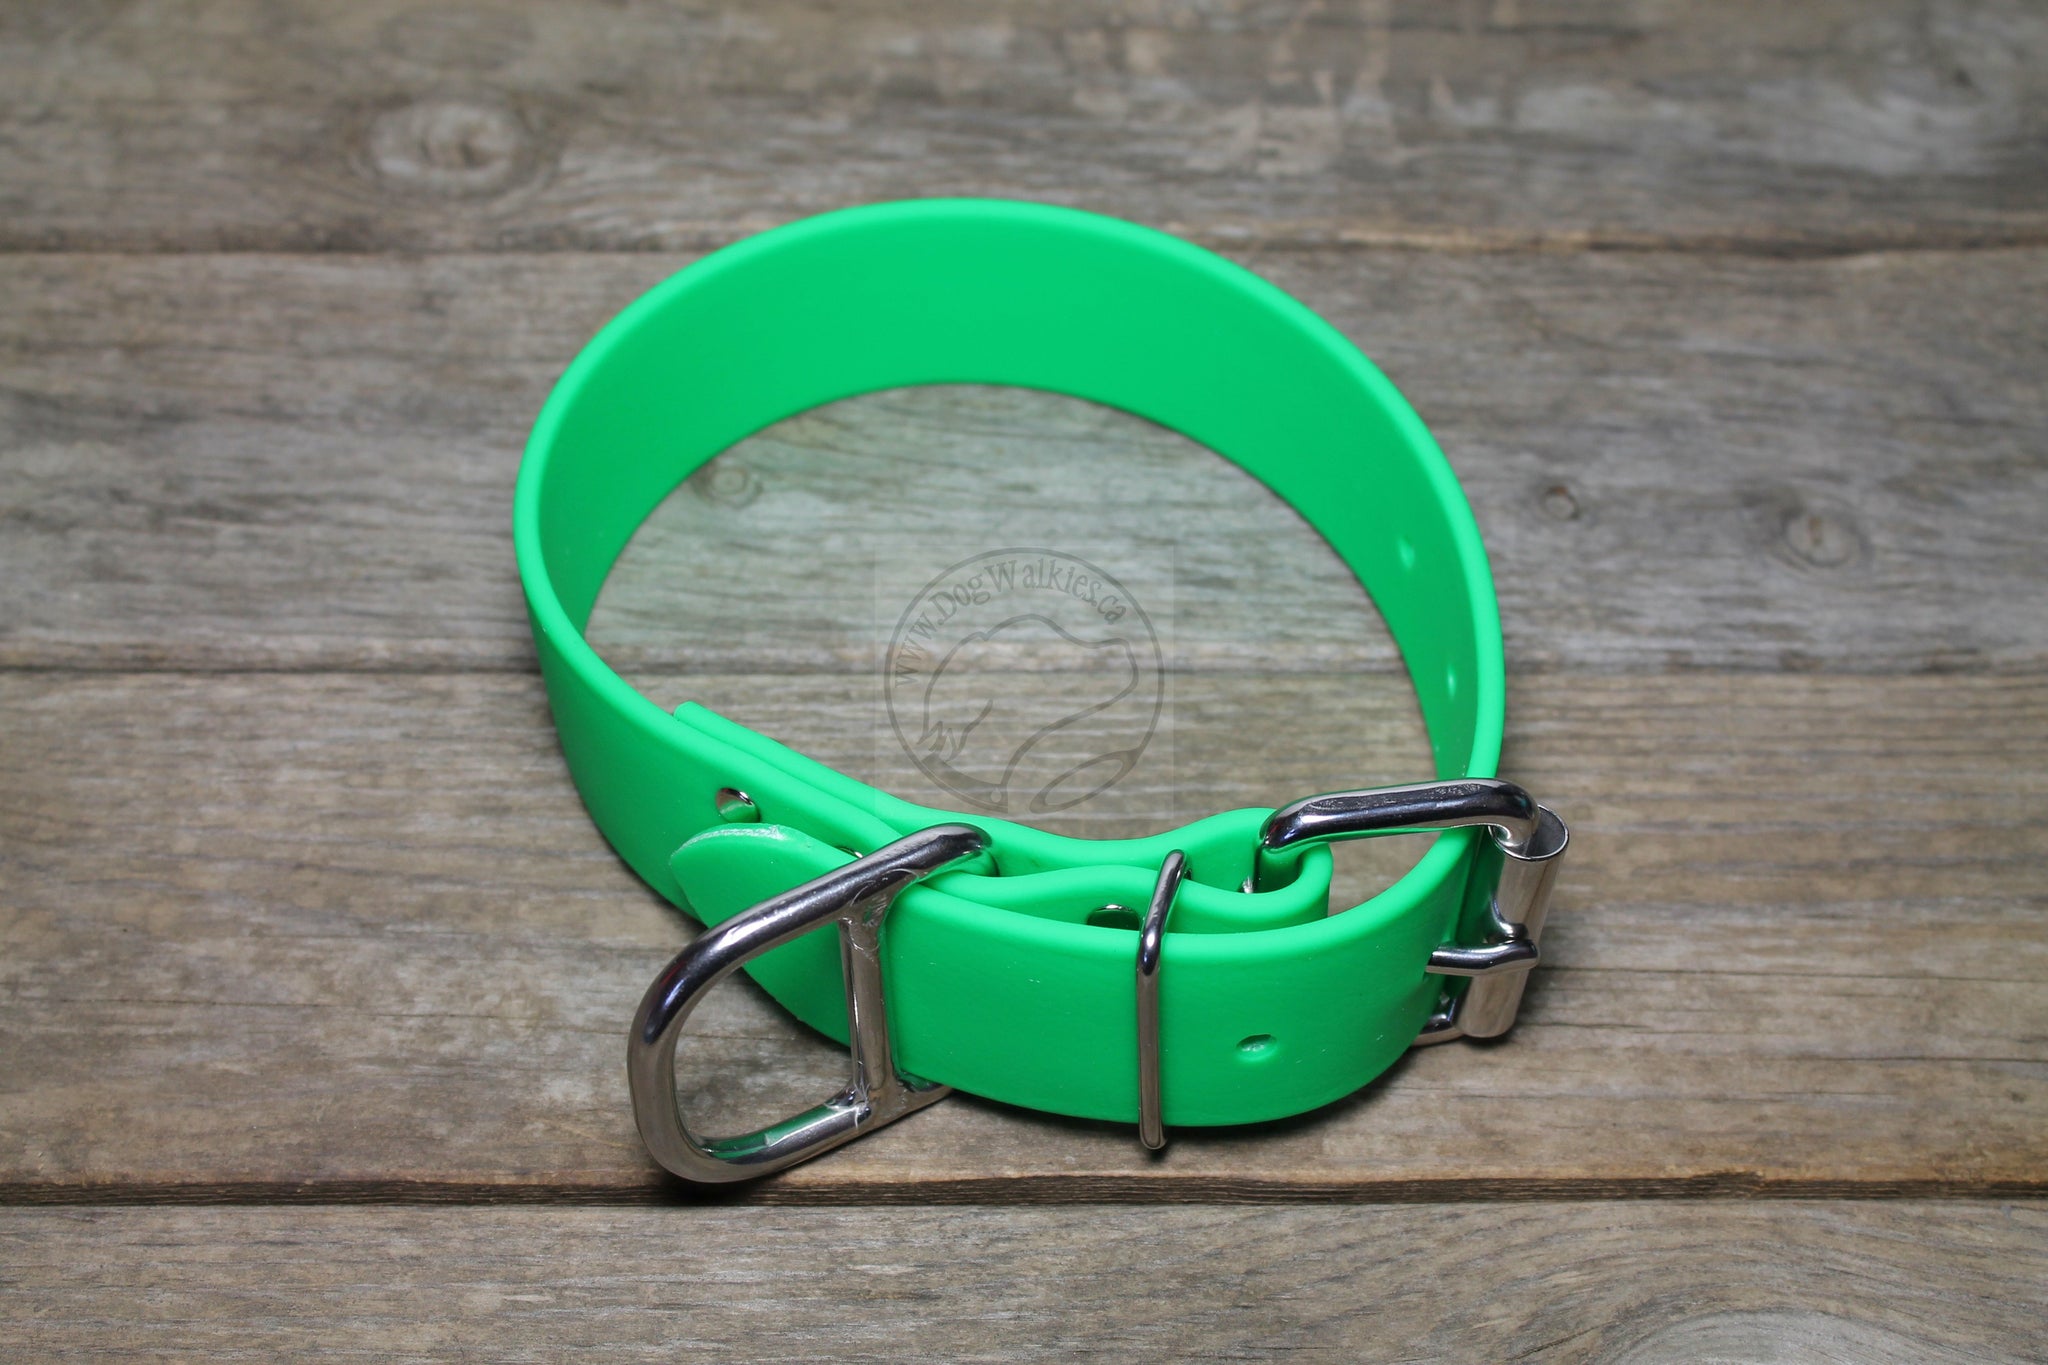 Neon Apple Green Biothane Dog Collar - Extra Wide - 1.5 inch (38mm) wide